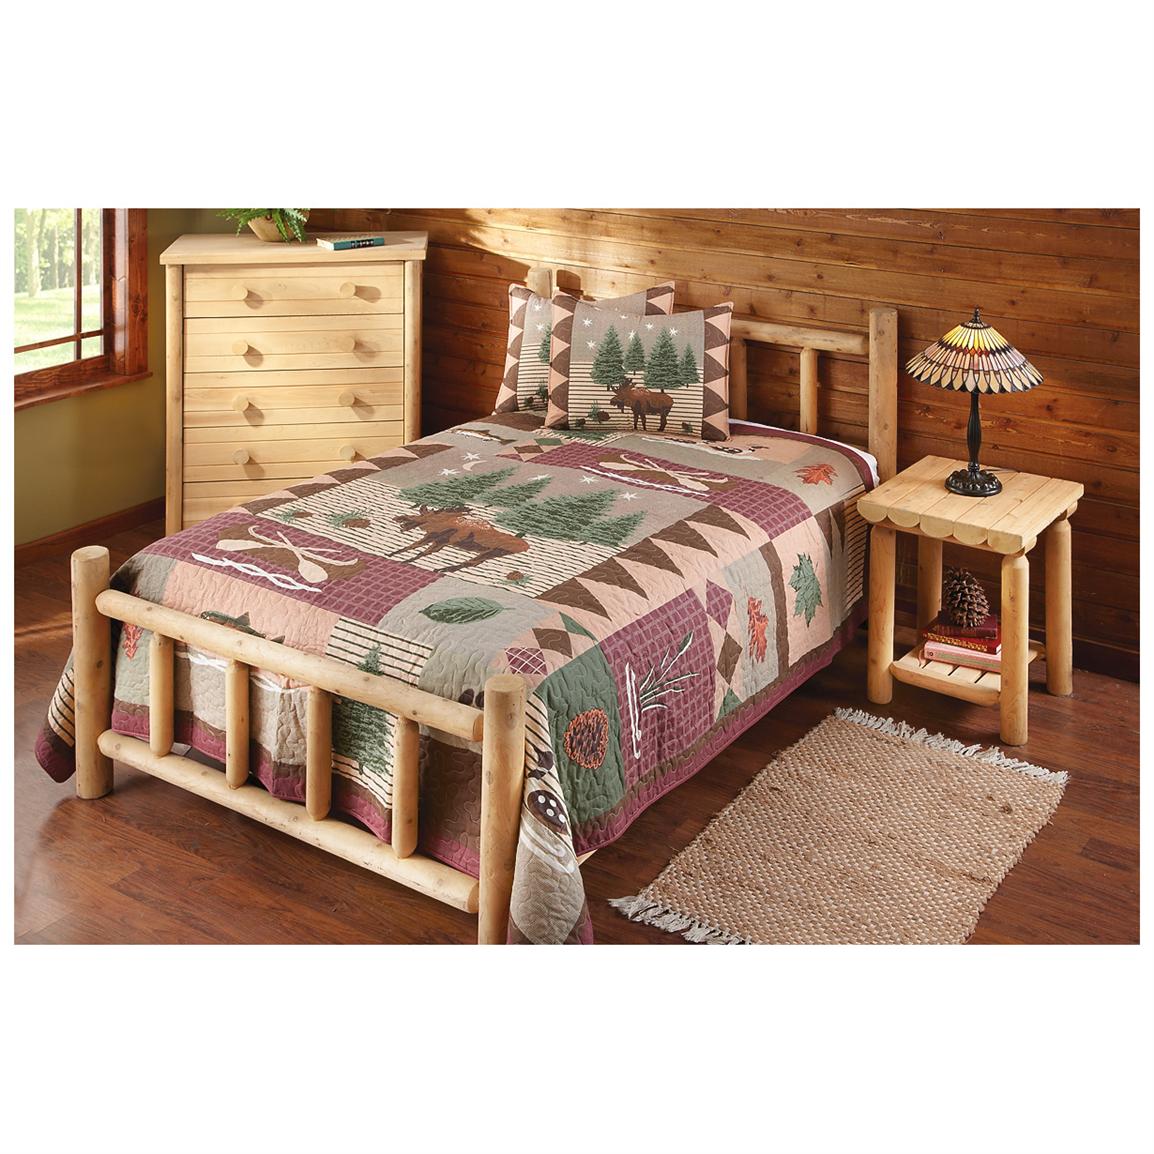 Castlecreek Twin Deluxe Cedar Log Bed - 551981, Bedroom Sets